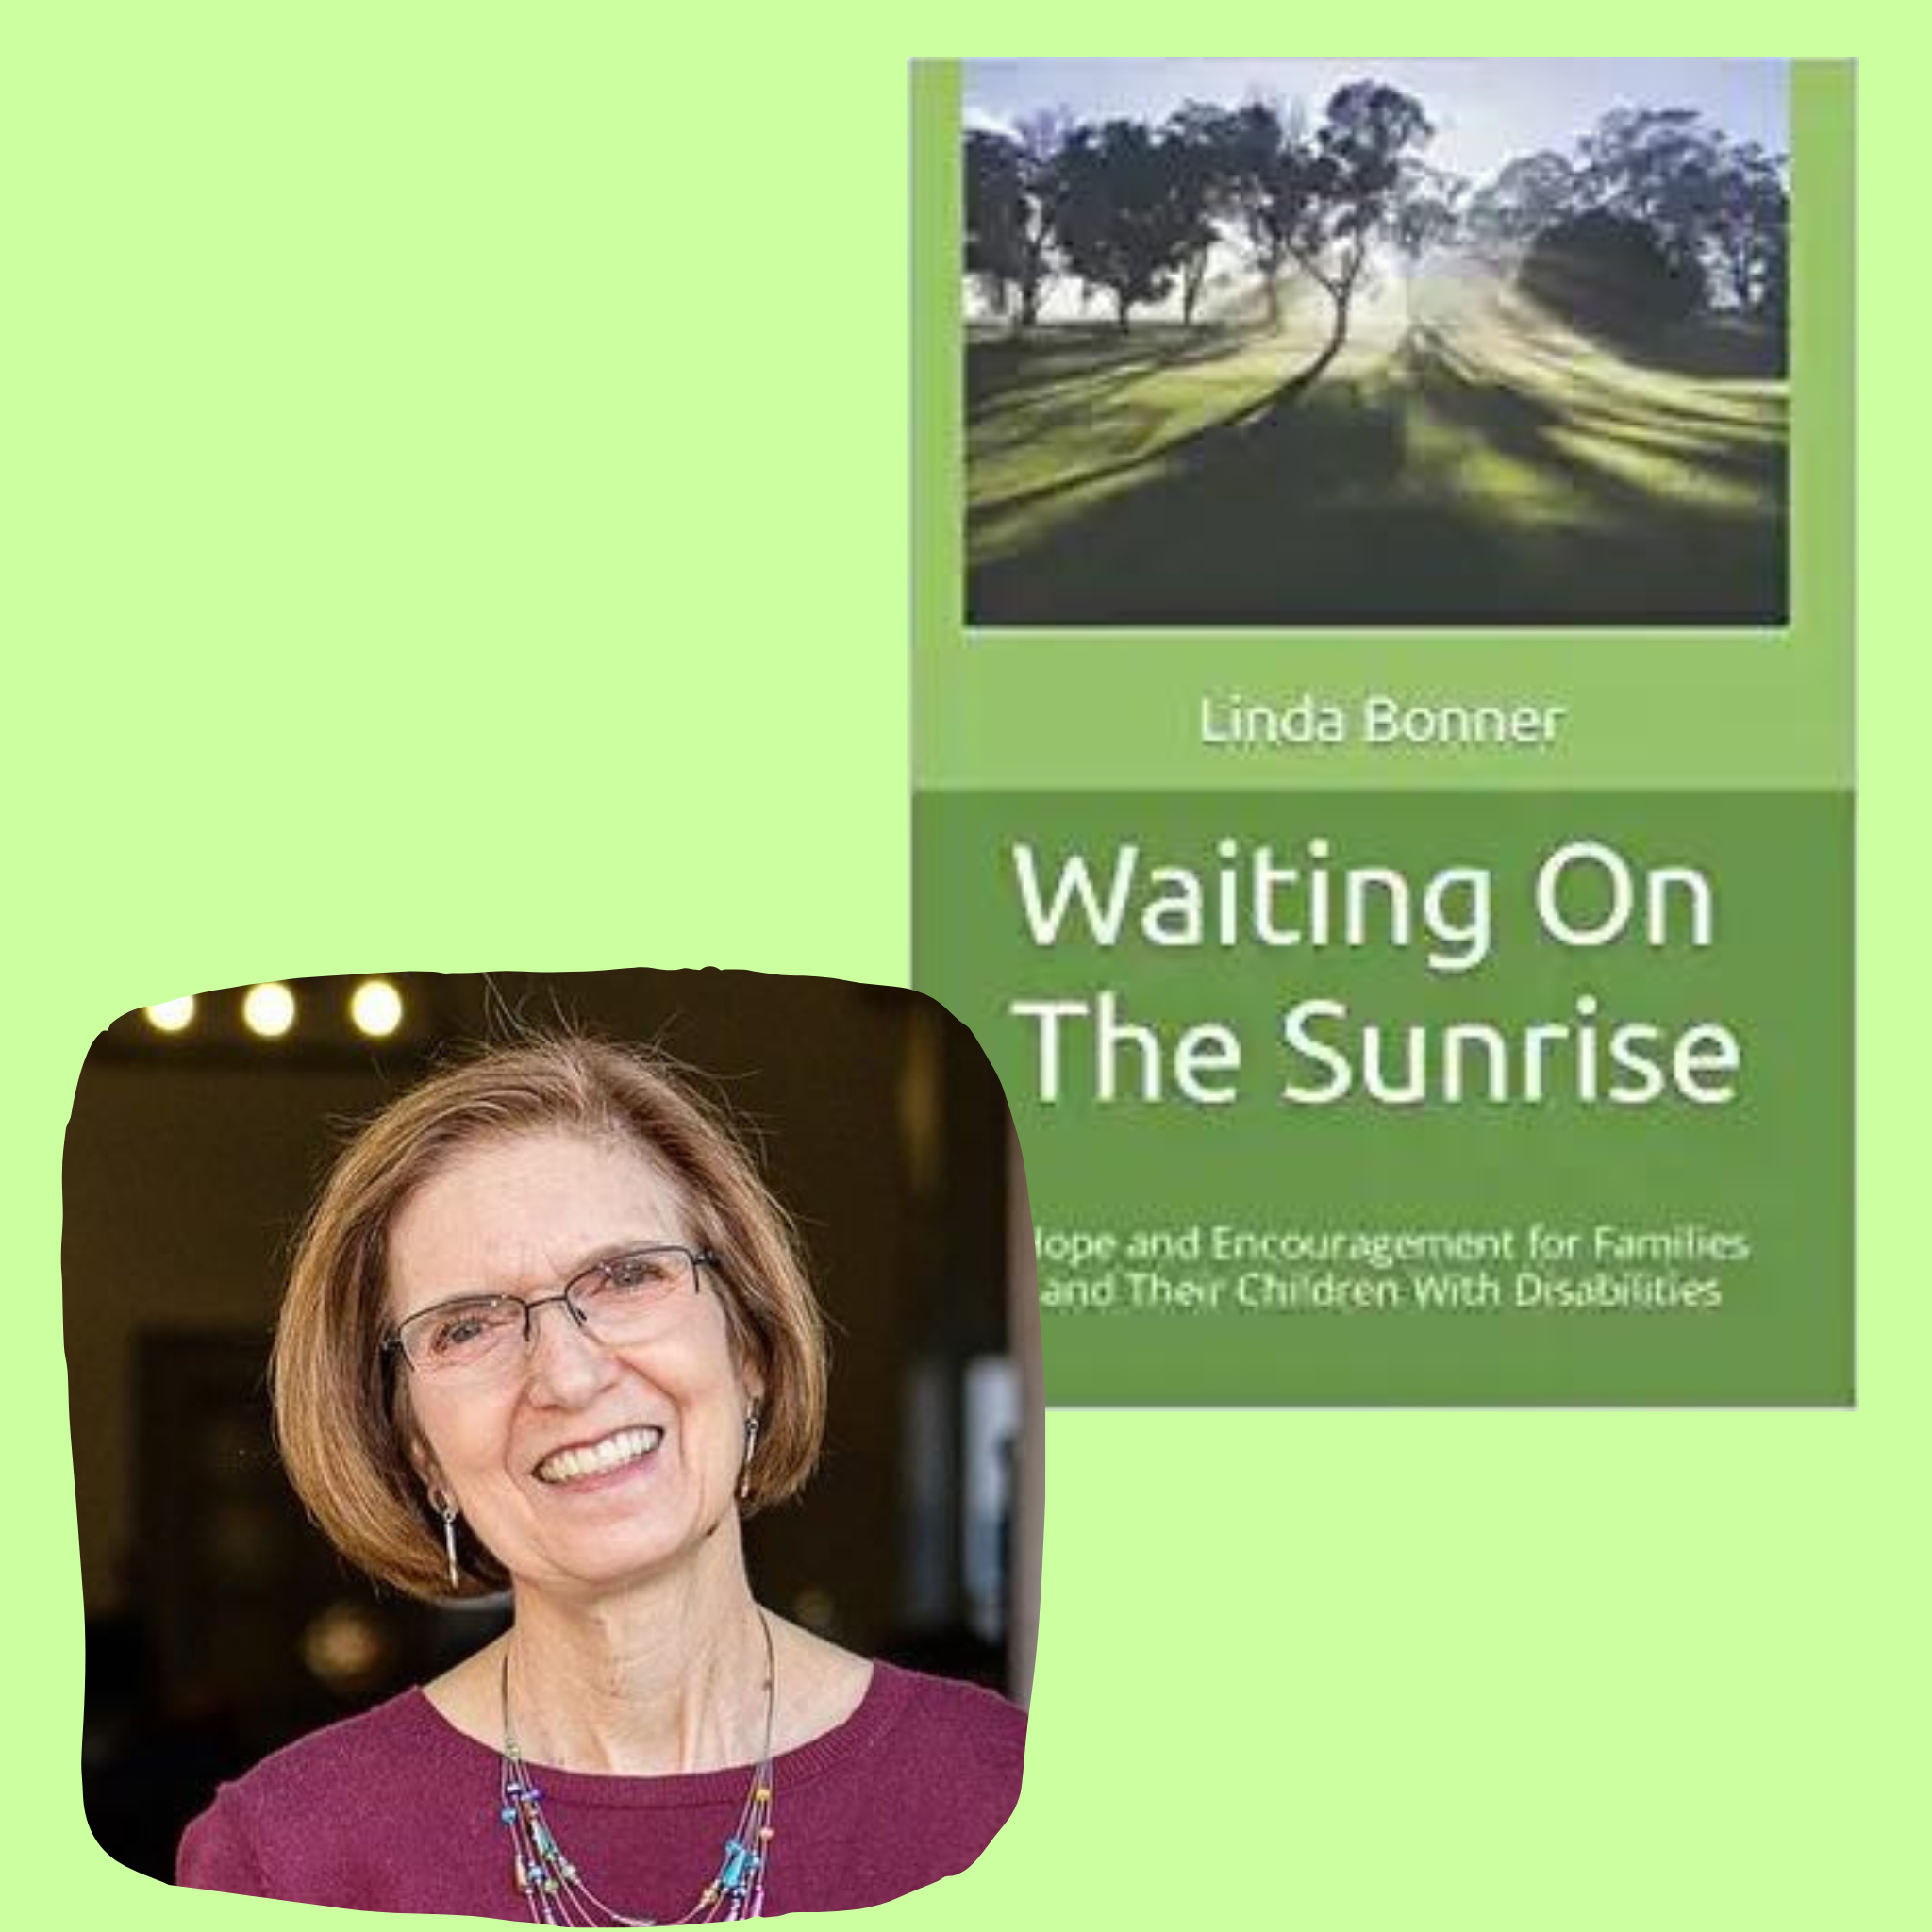 Linda Bonner, author of the self published book "Waiting on the Sunrise" from Kindle Direct Publishing and Amazon KDP